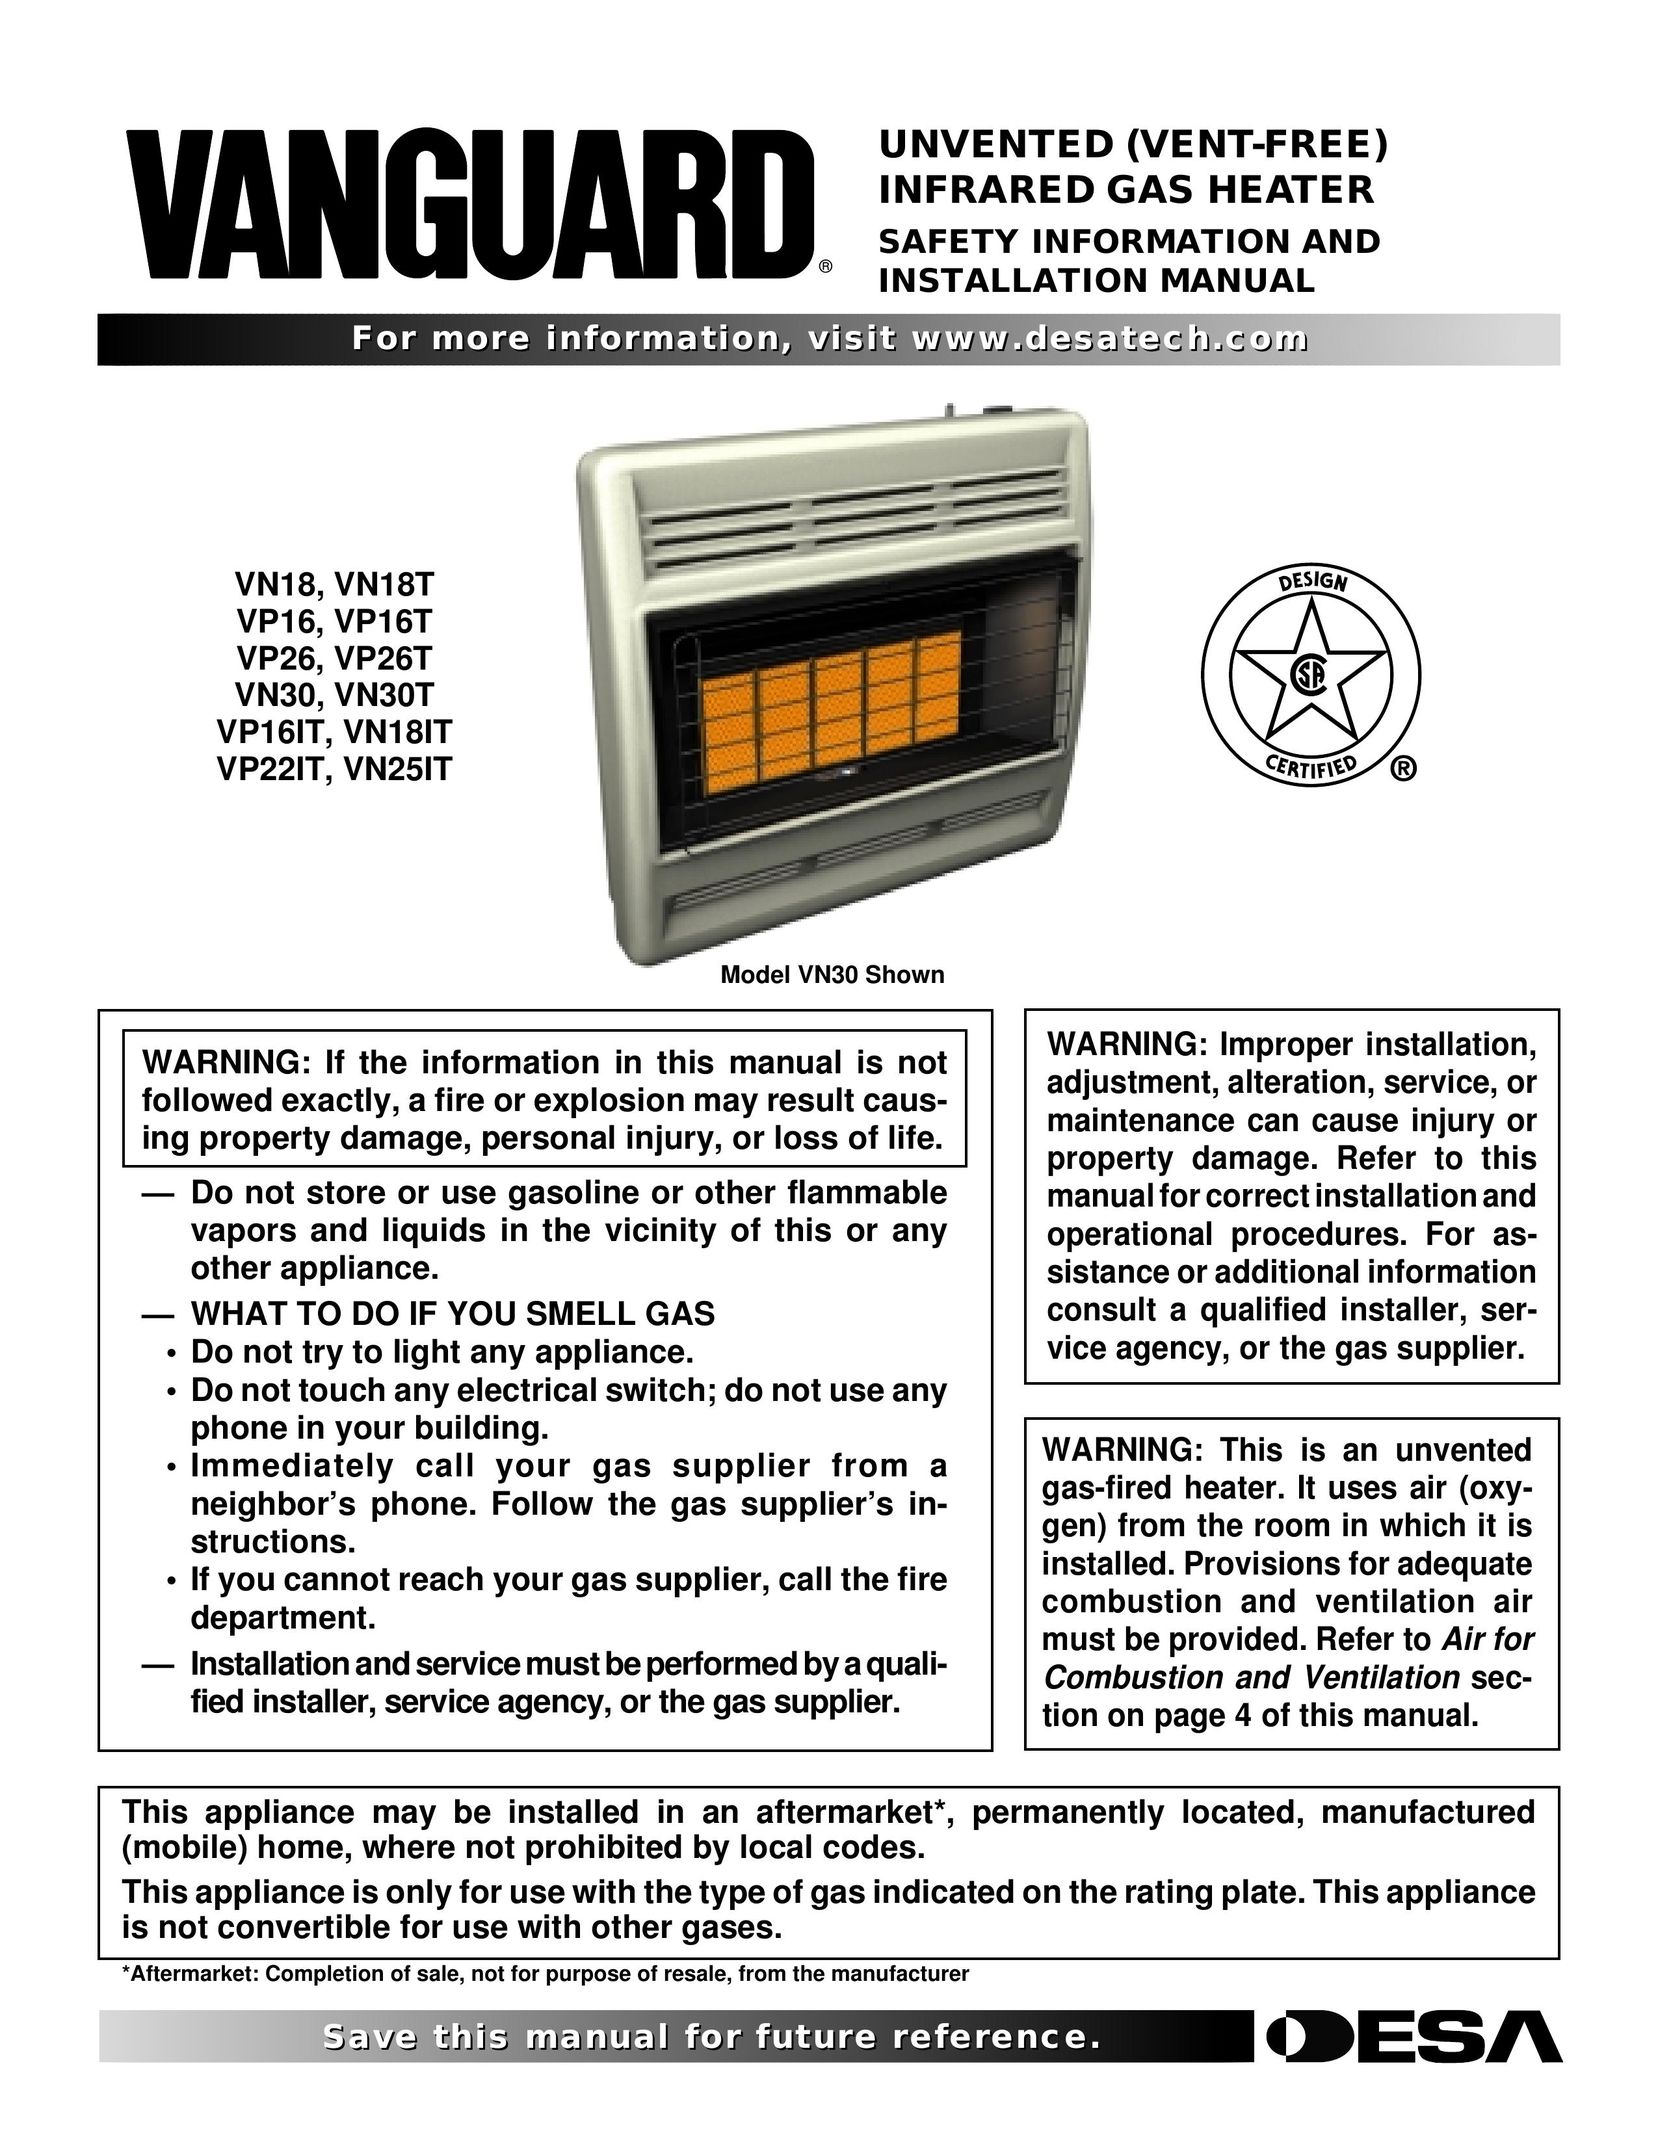 Vanguard Heating VN18T Gas Heater User Manual